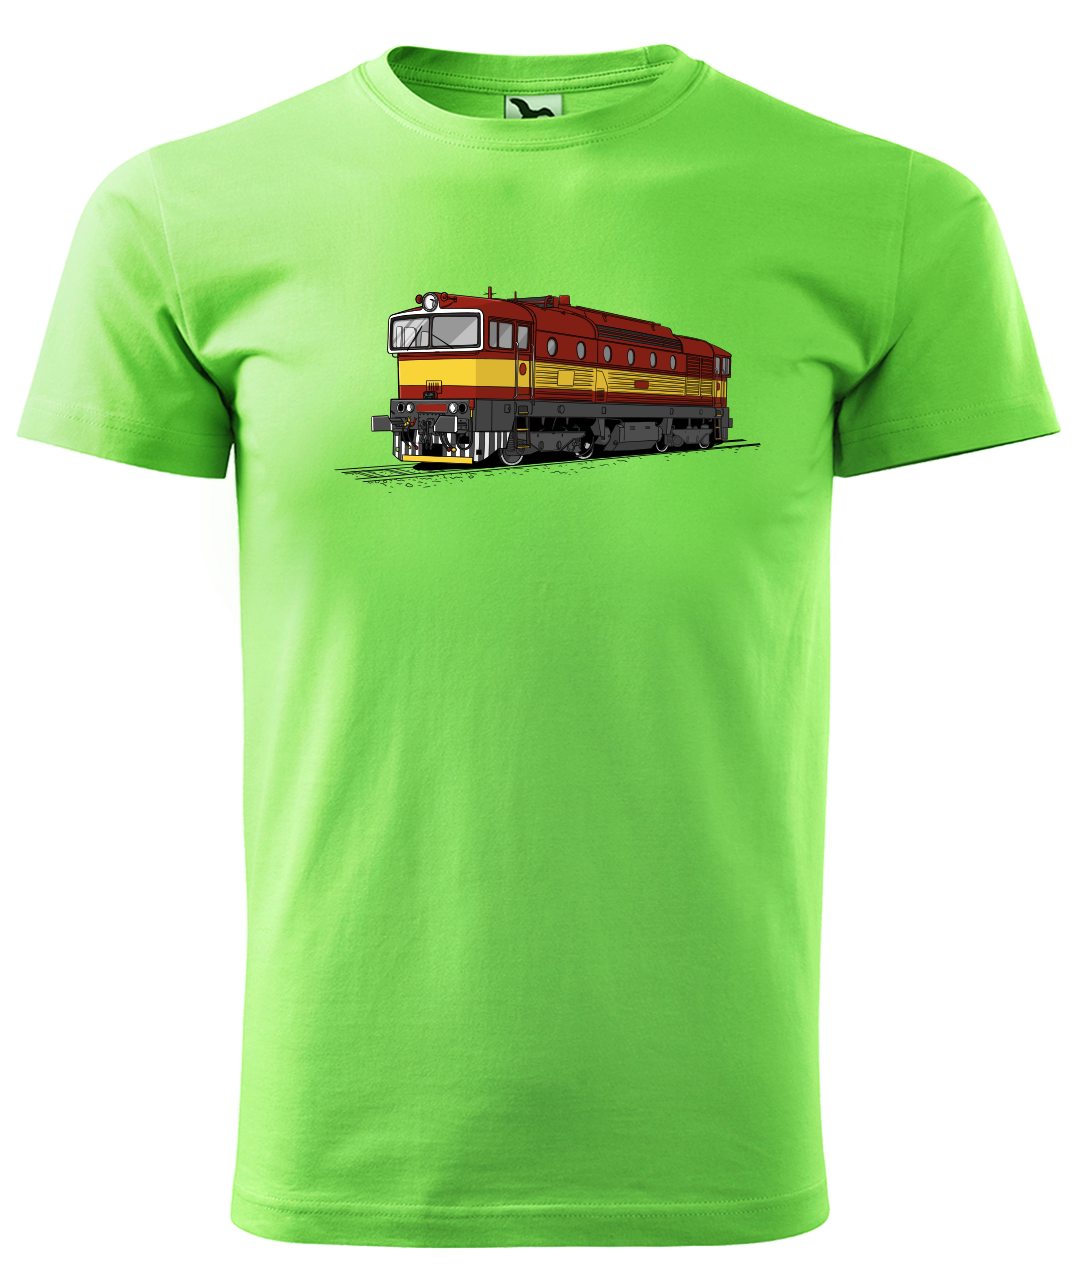 Dětské tričko s vlakem - Barevná lokomotiva BREJLOVEC Velikost: 6 let / 122 cm, Barva: Apple Green (92)